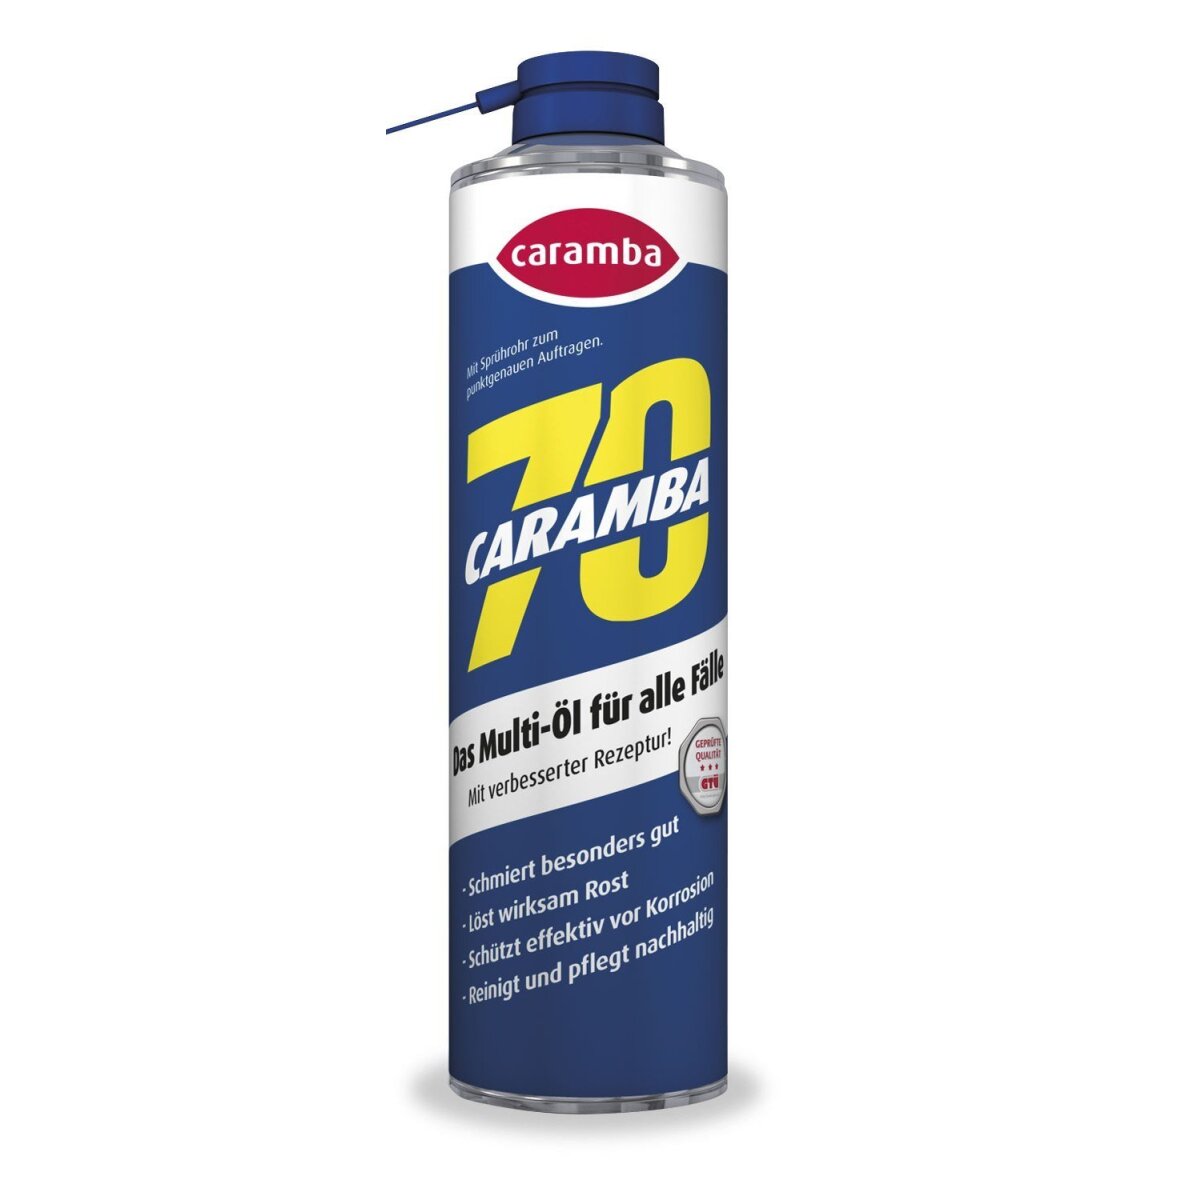 Caramba 70 Multi Functional Penetrant Spray 400ml, 7,79 €